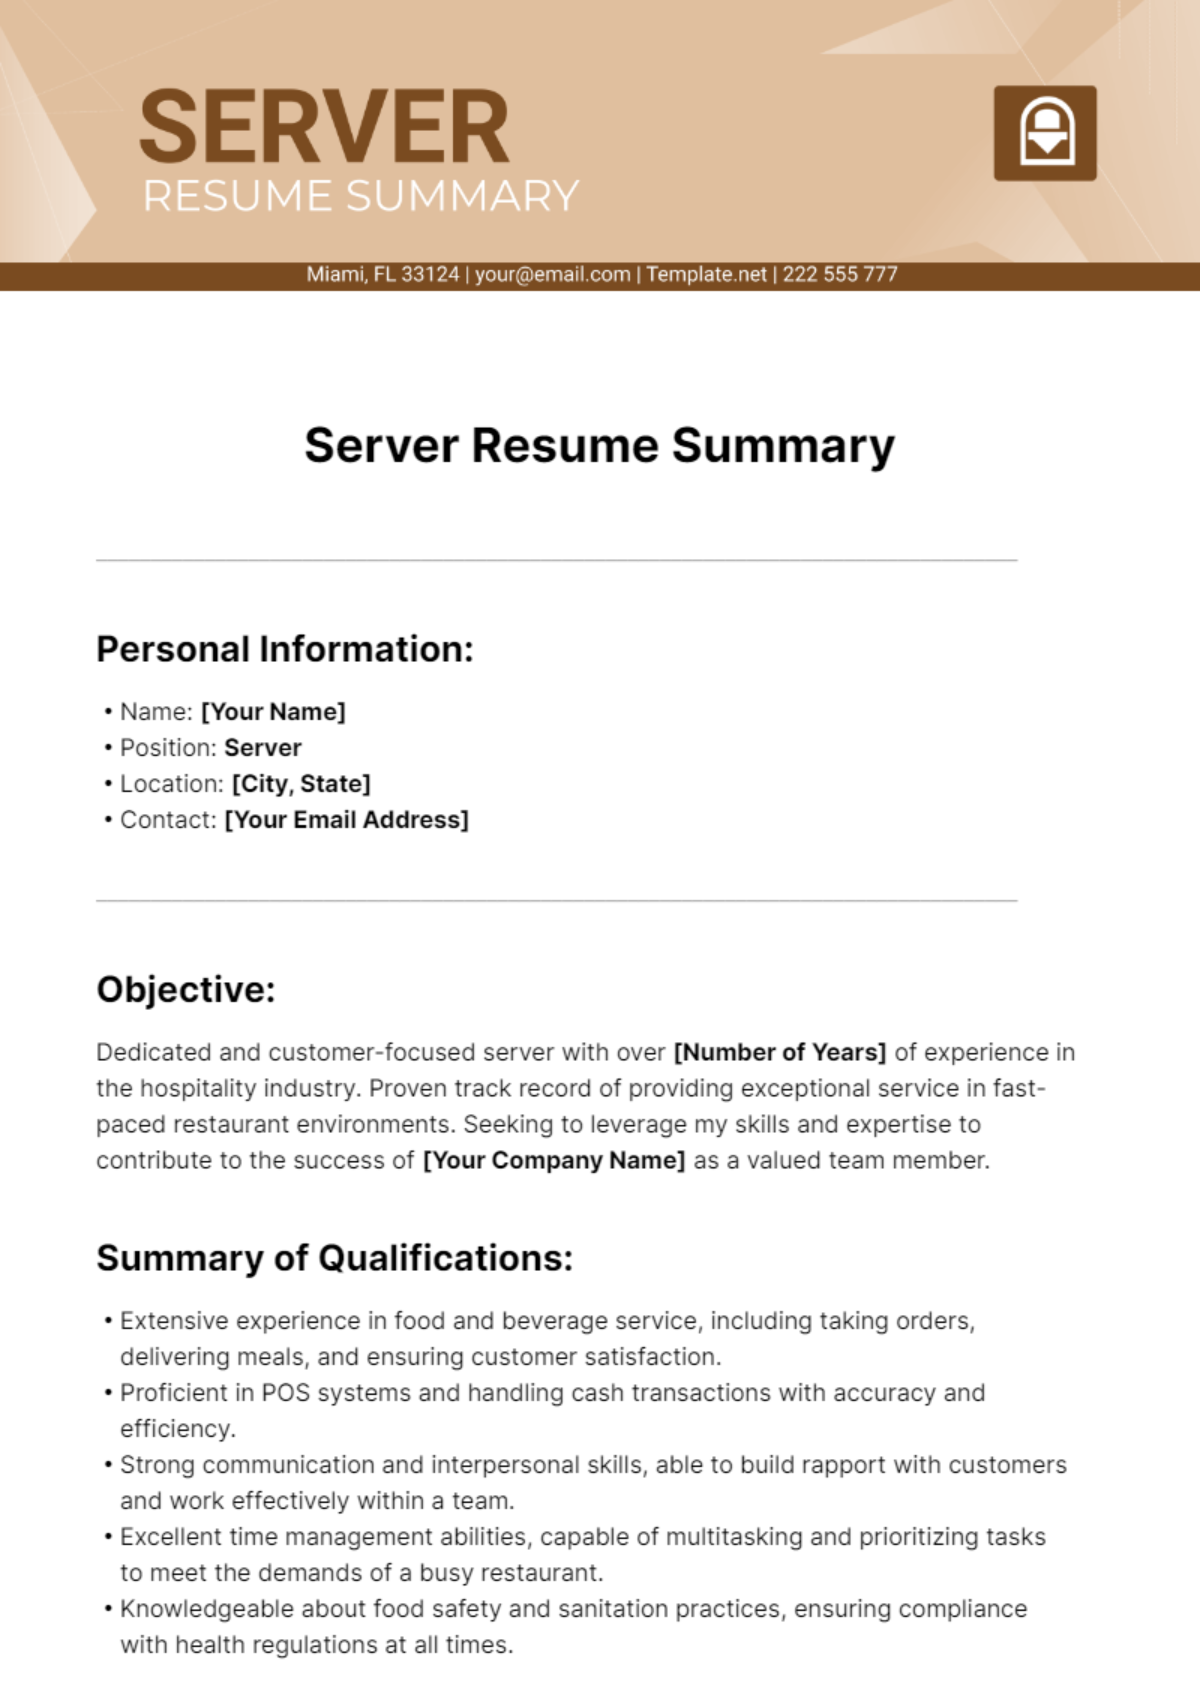 Server Resume Summary Template